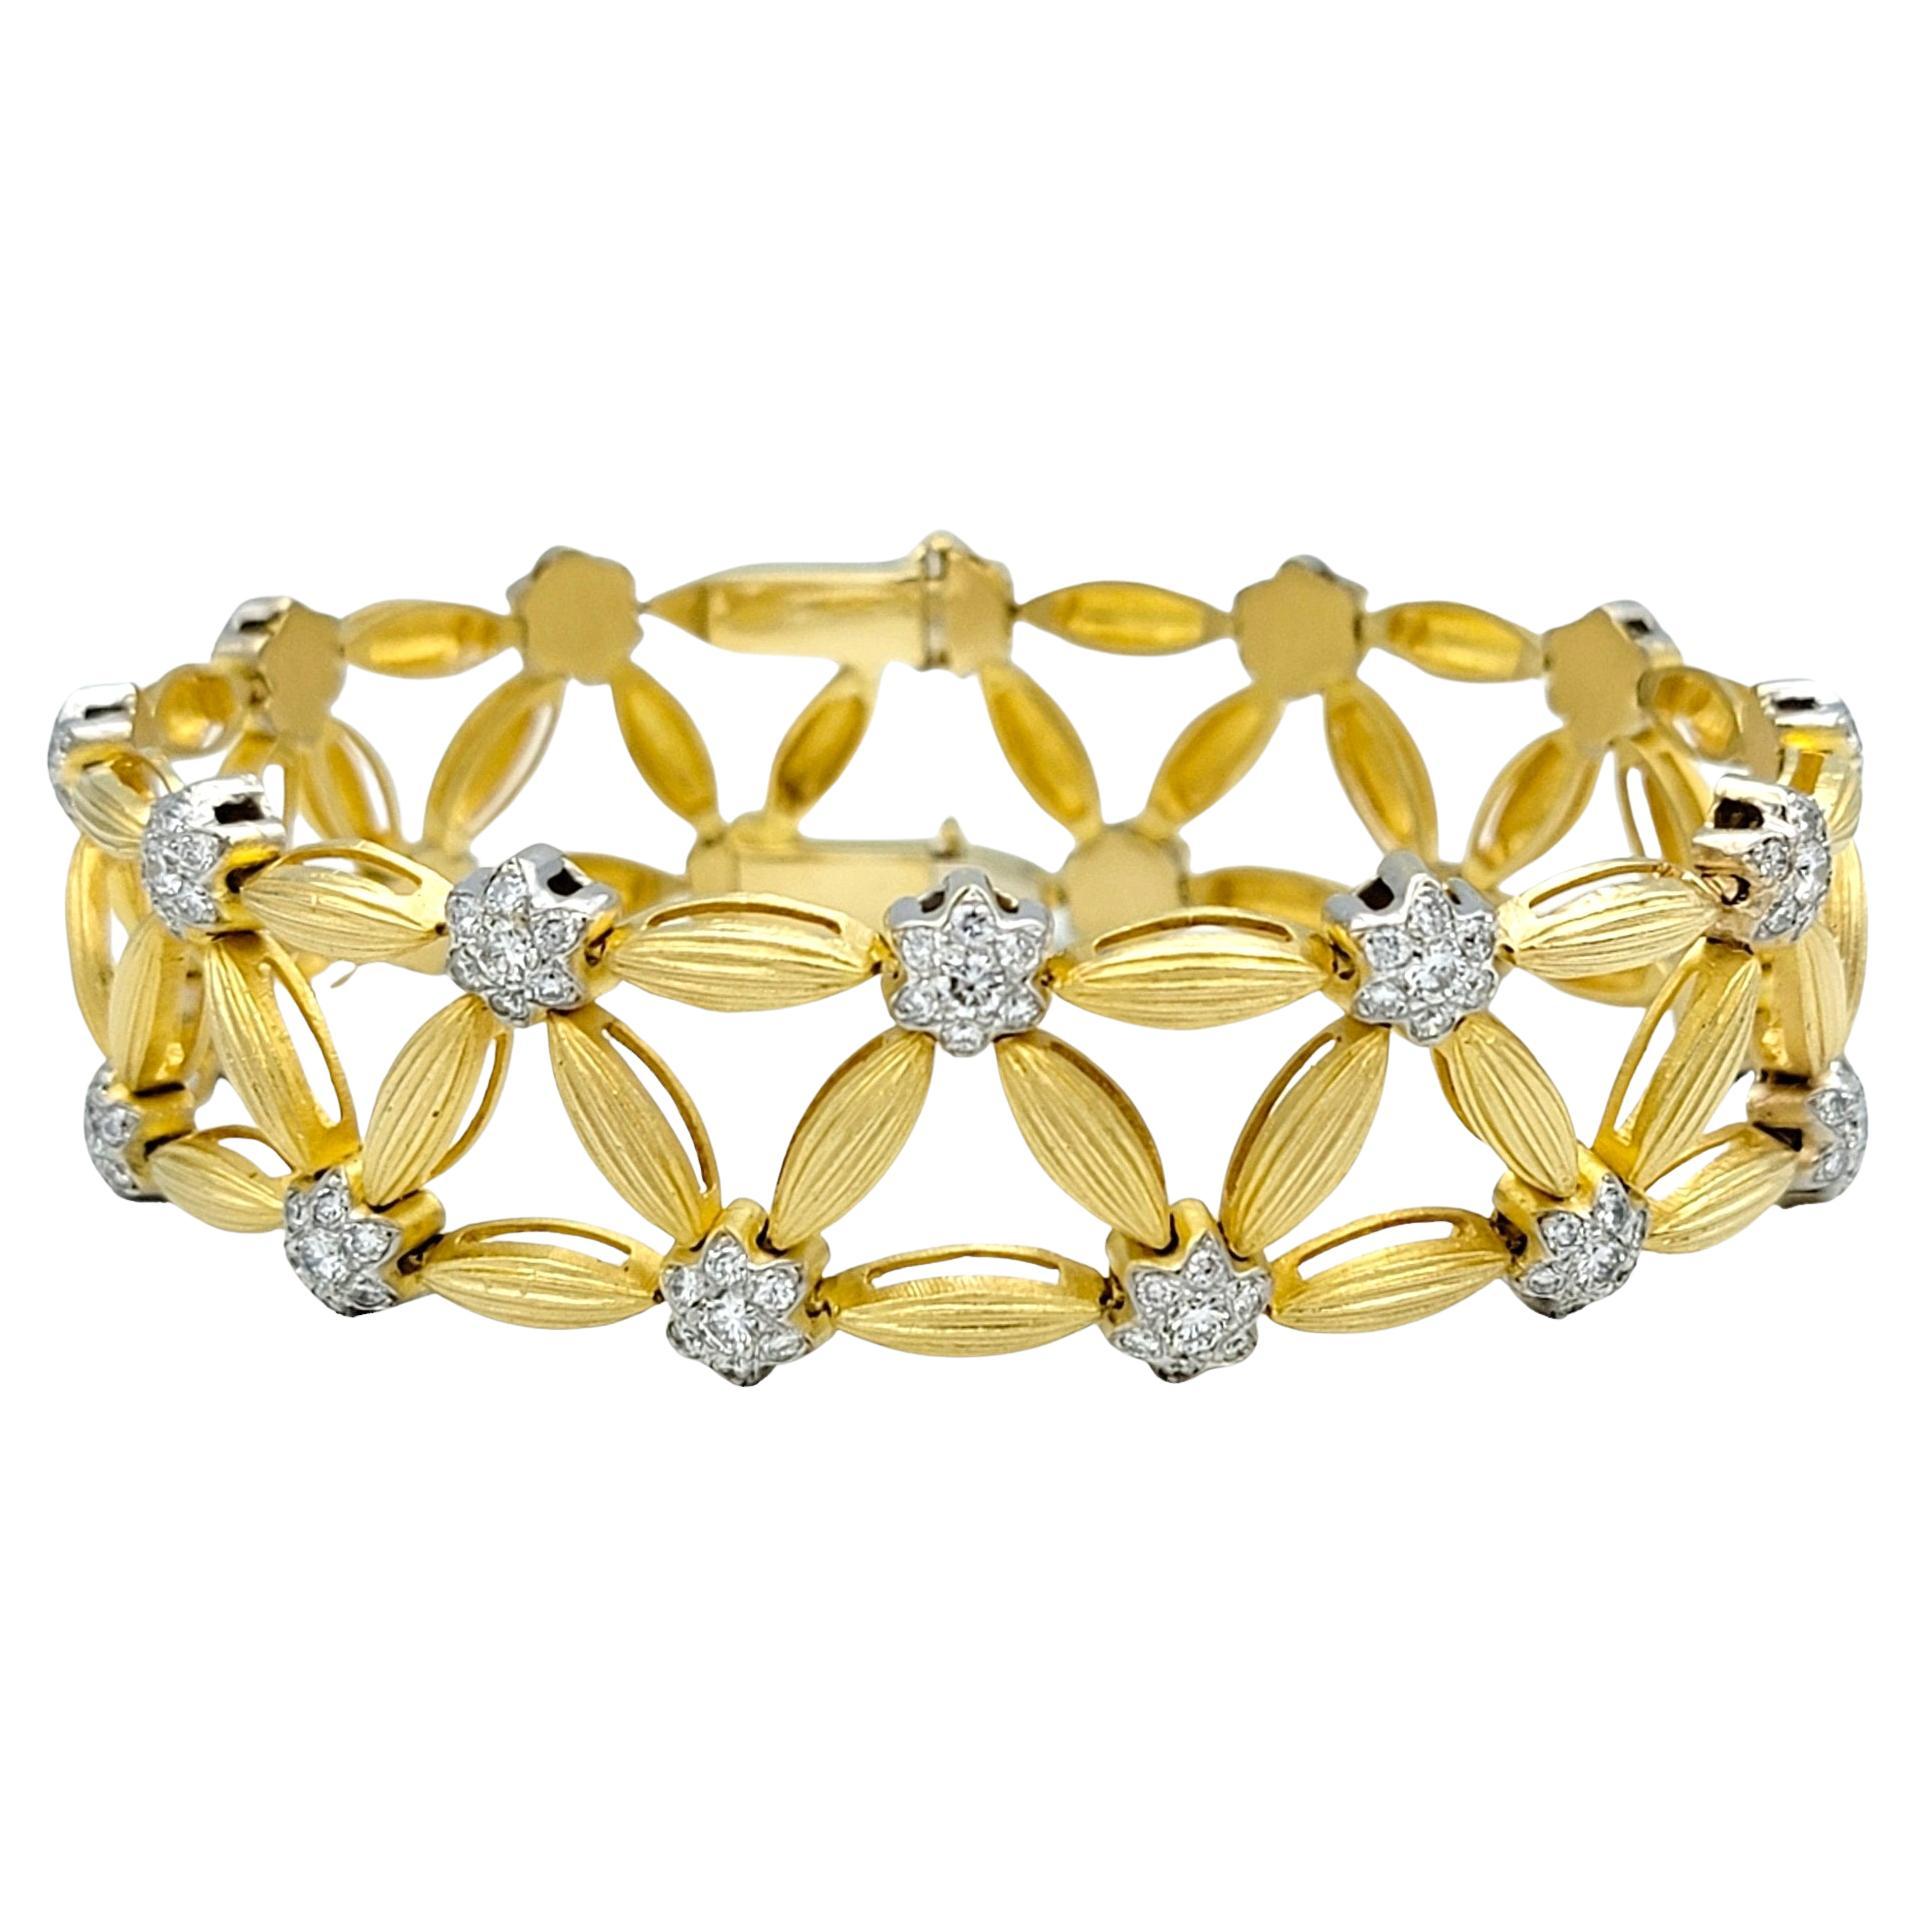 Flower and Leaf Motif Diamond Open Link Bracelet Set in 18 Karat Yellow Gold